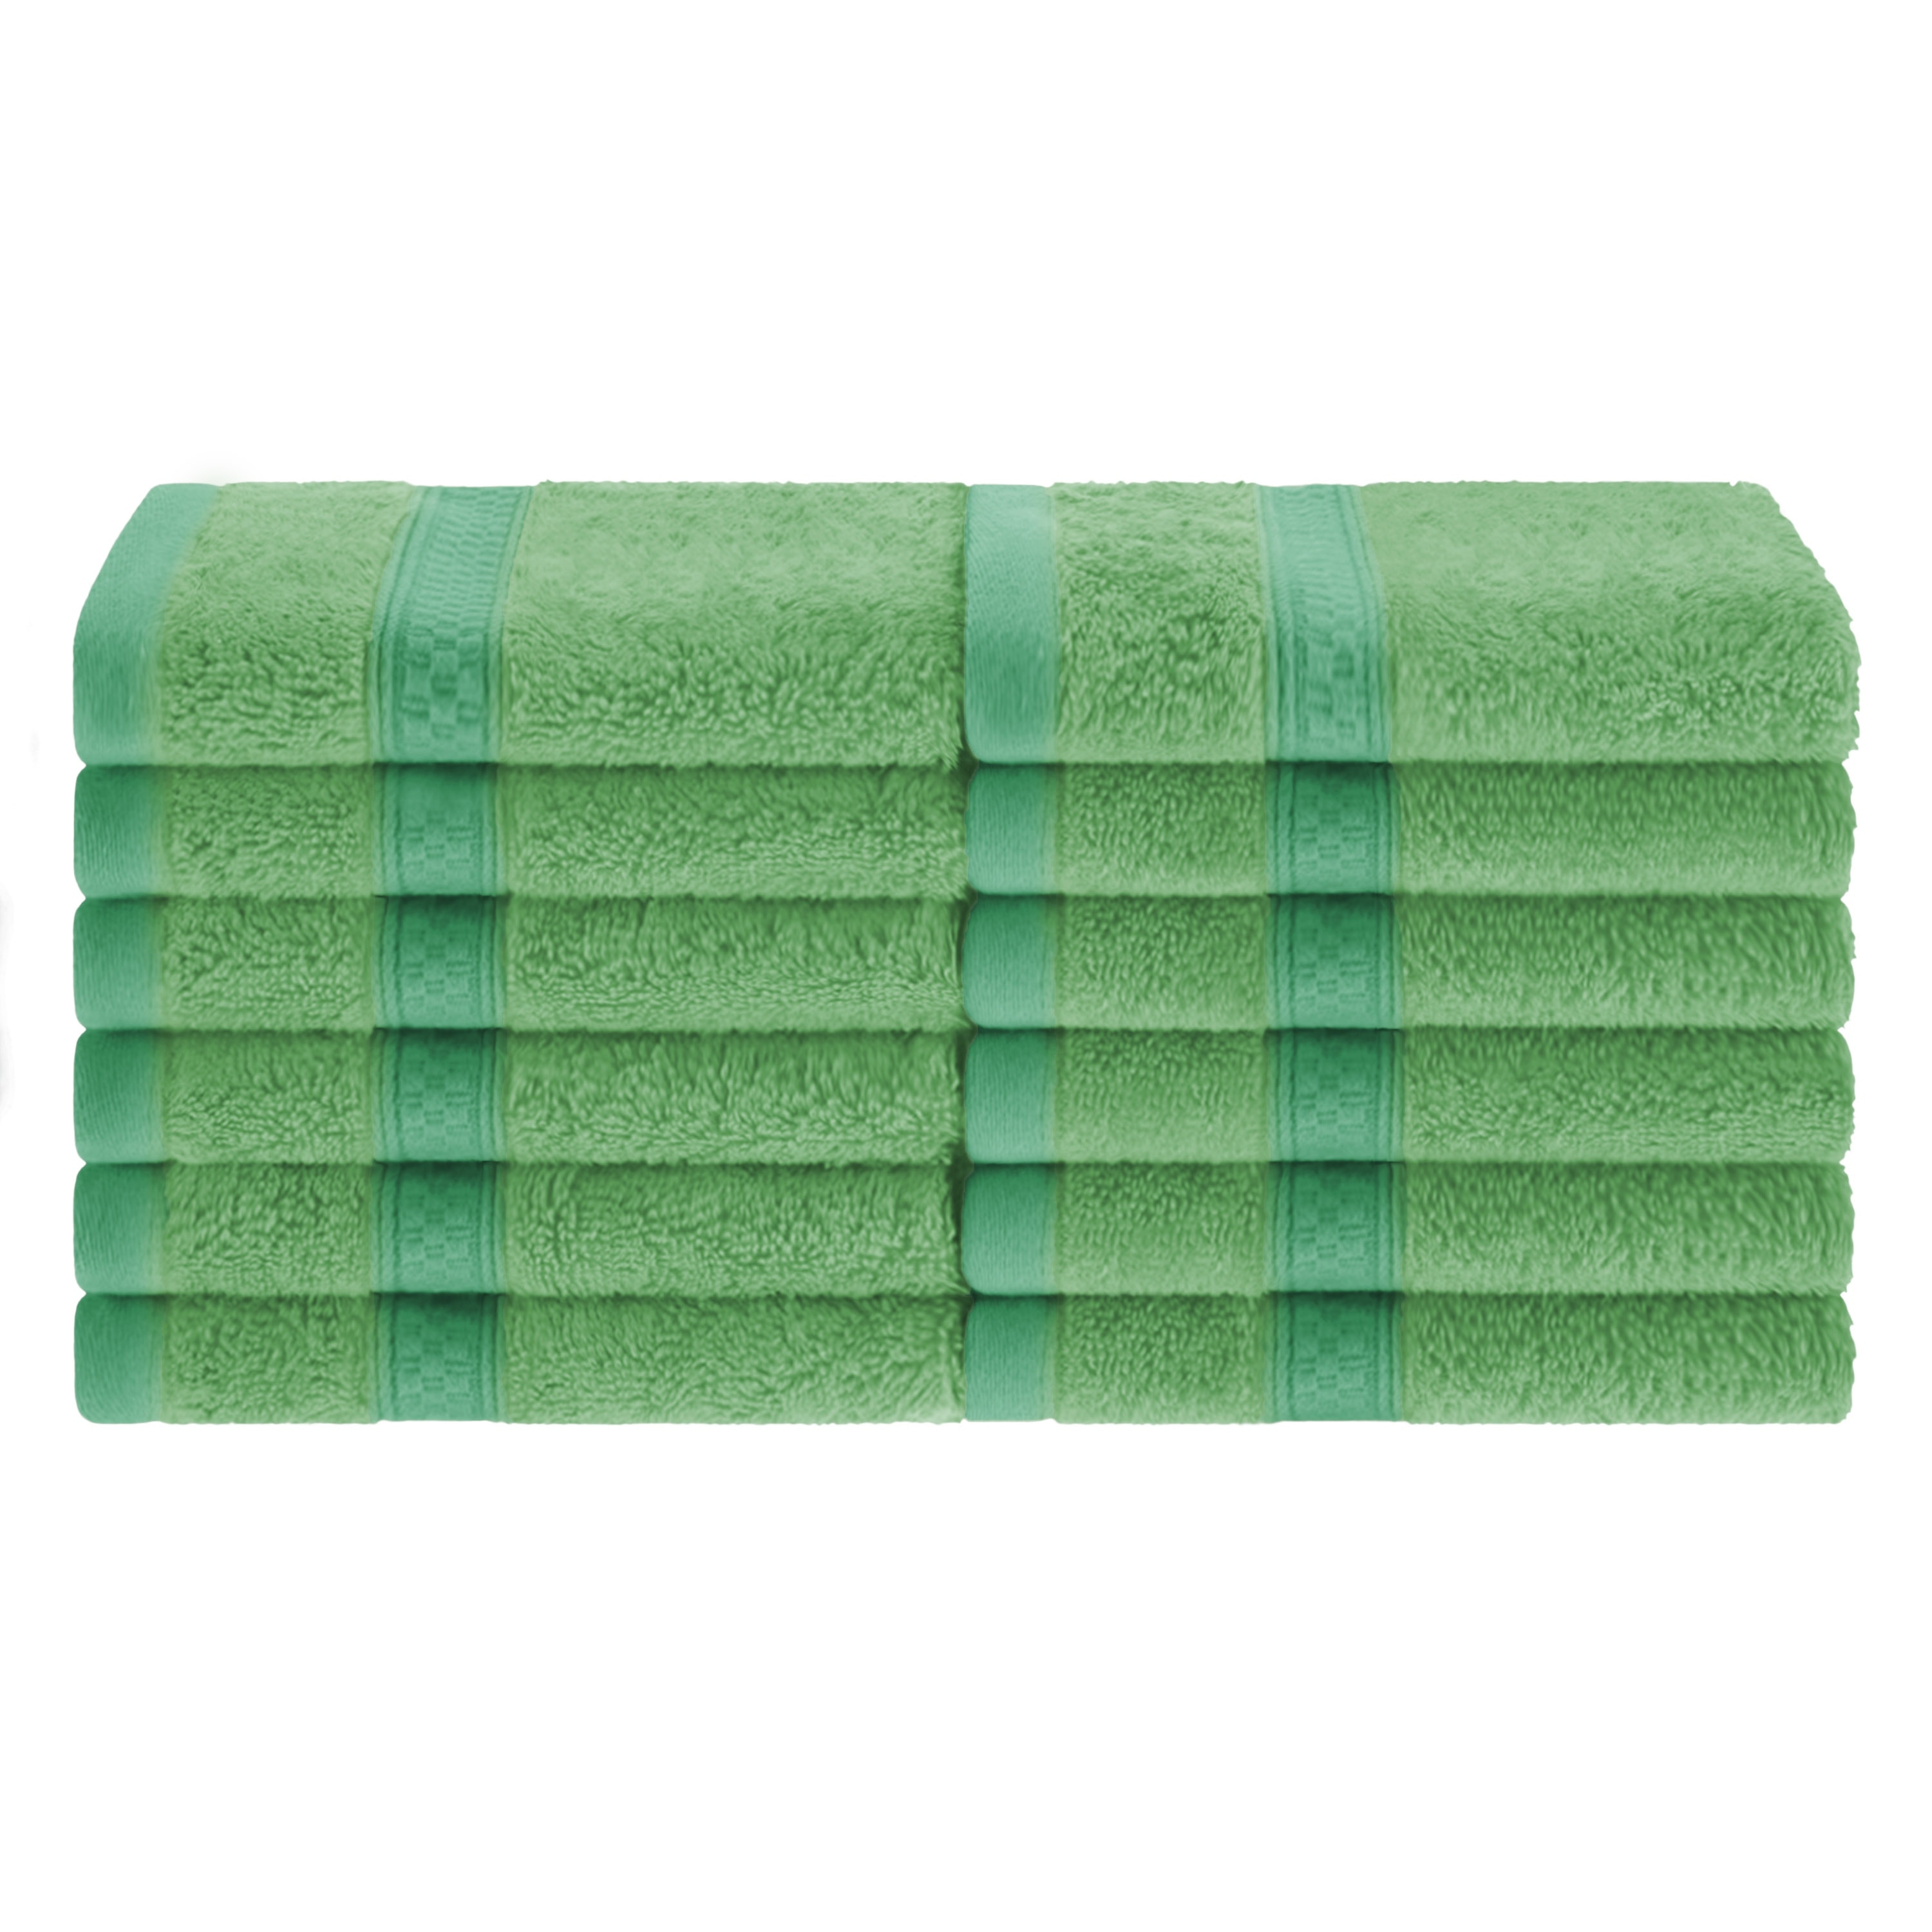  DKNY Quick Dry Cotton Towel Set - 2 Bath, 2 Hand, 2 Washcloths,  Seafoam : Home & Kitchen